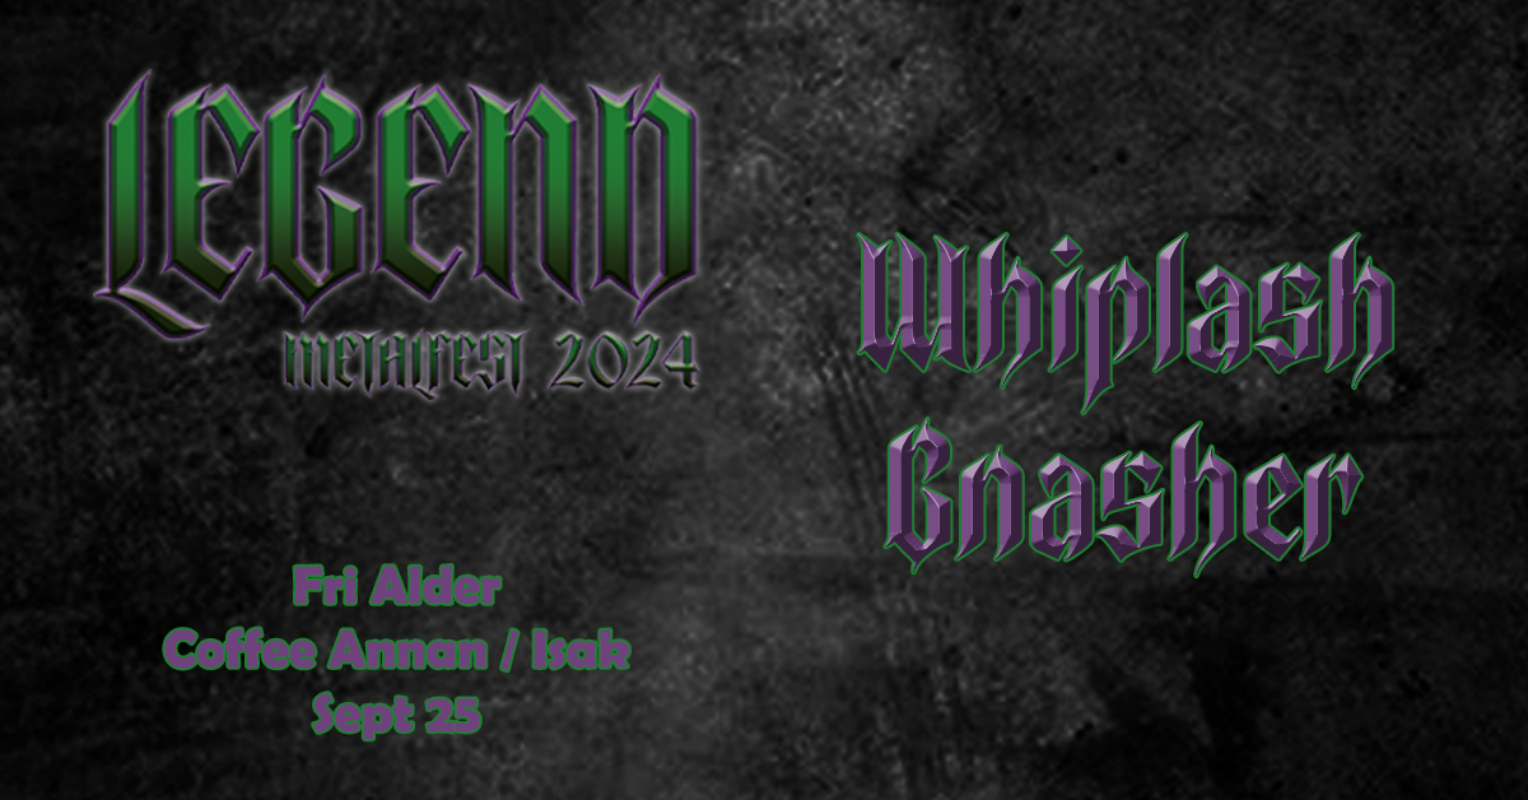 Legend Metalfest ungdom